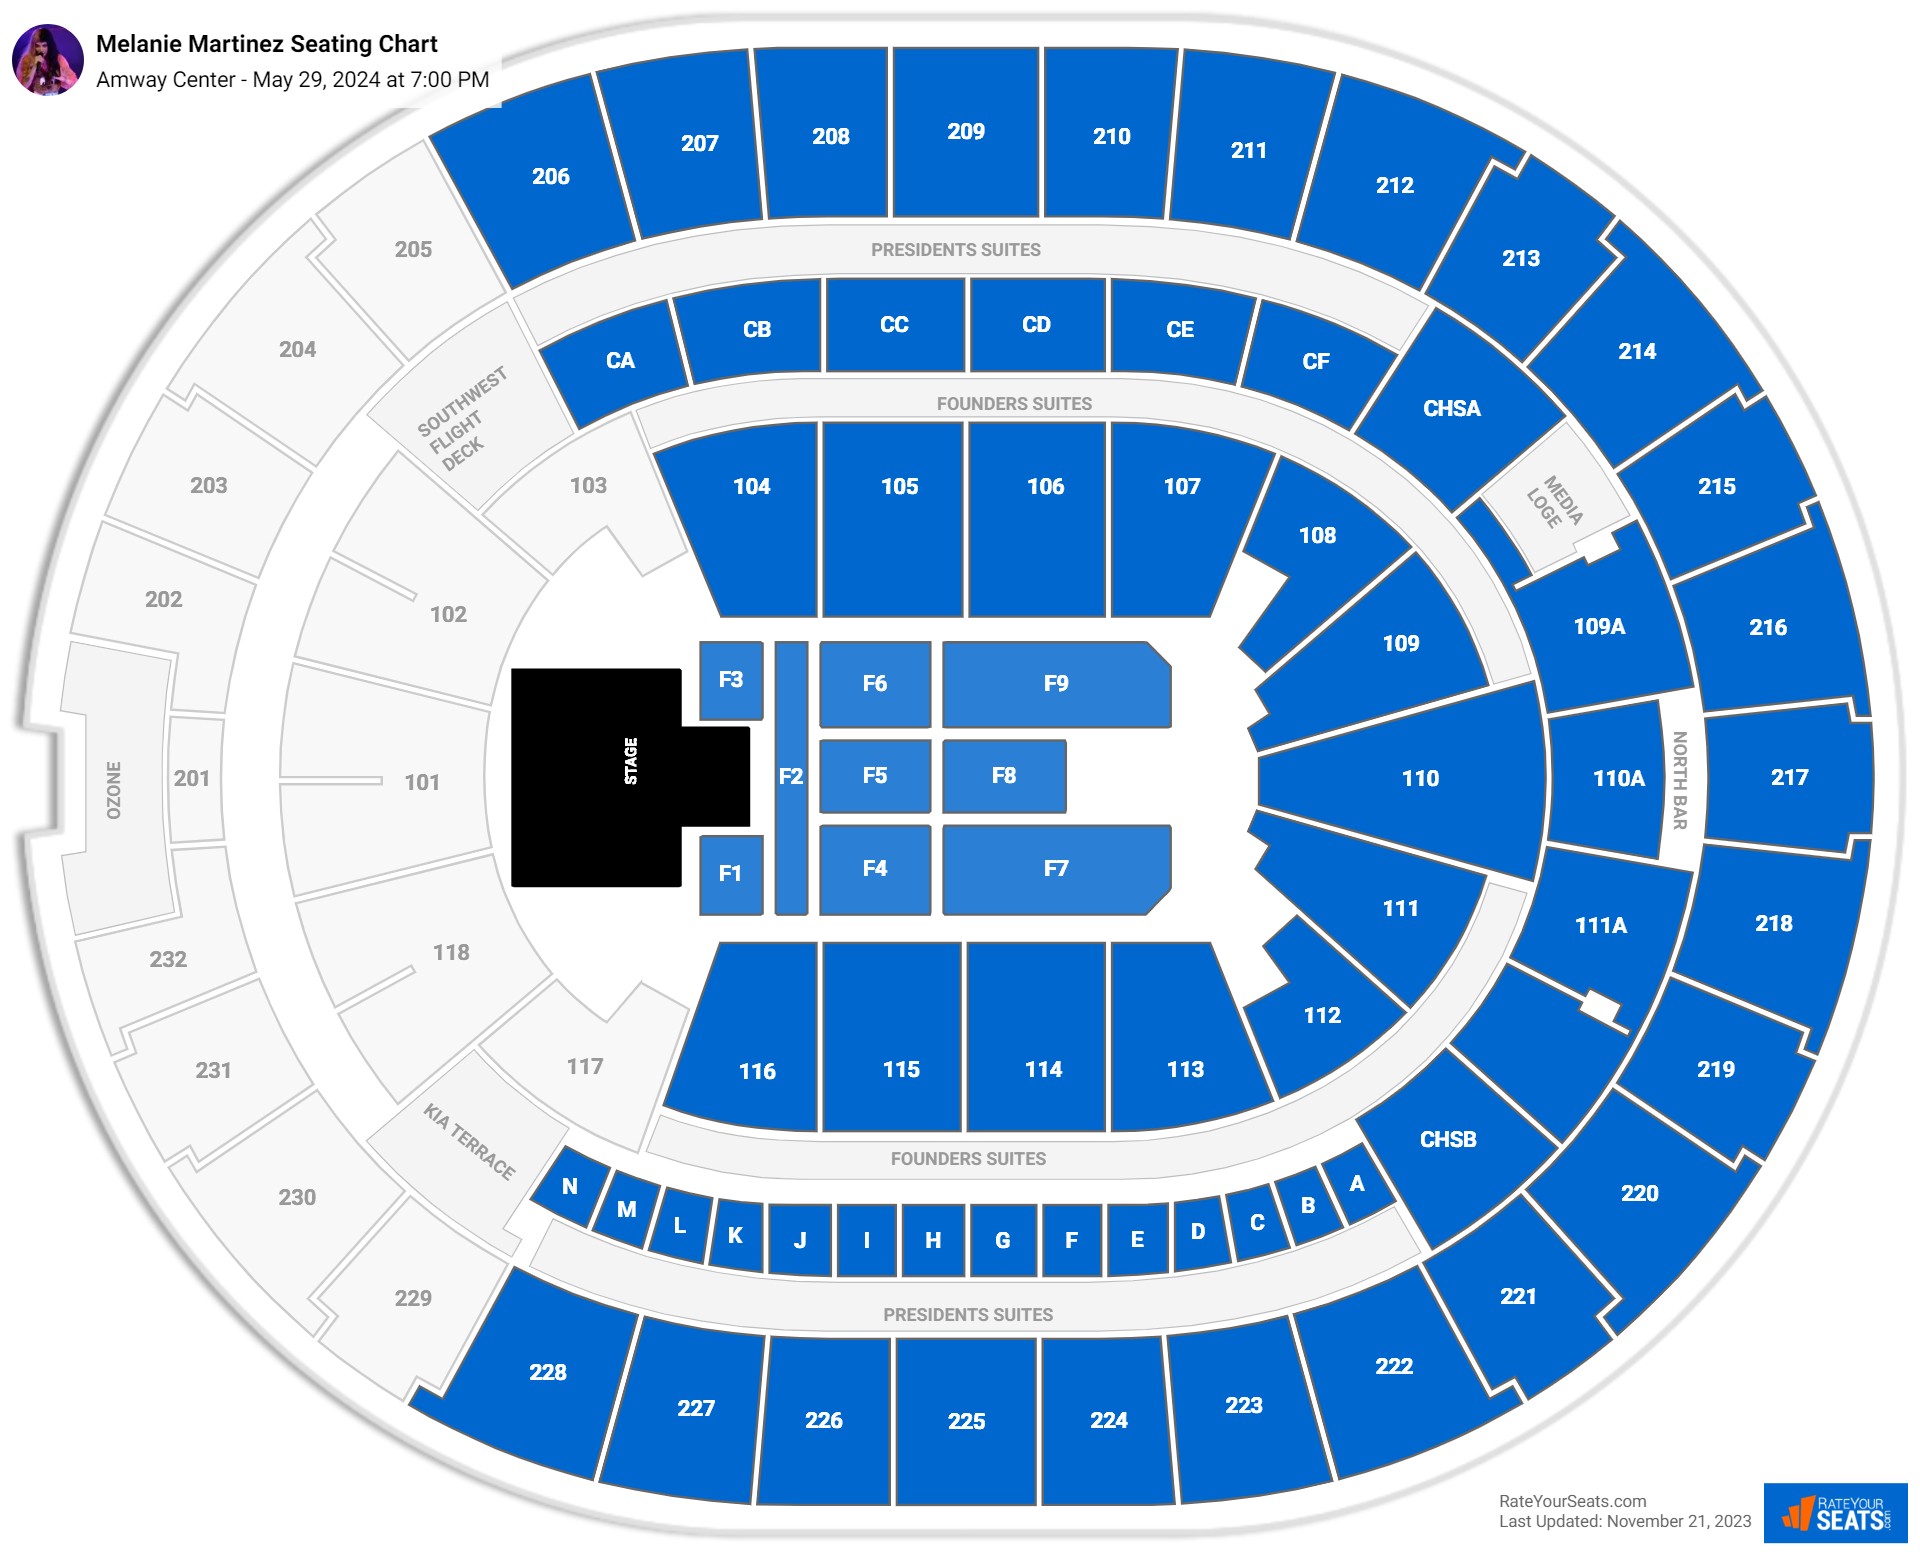 Kia Center Concert Seating Chart